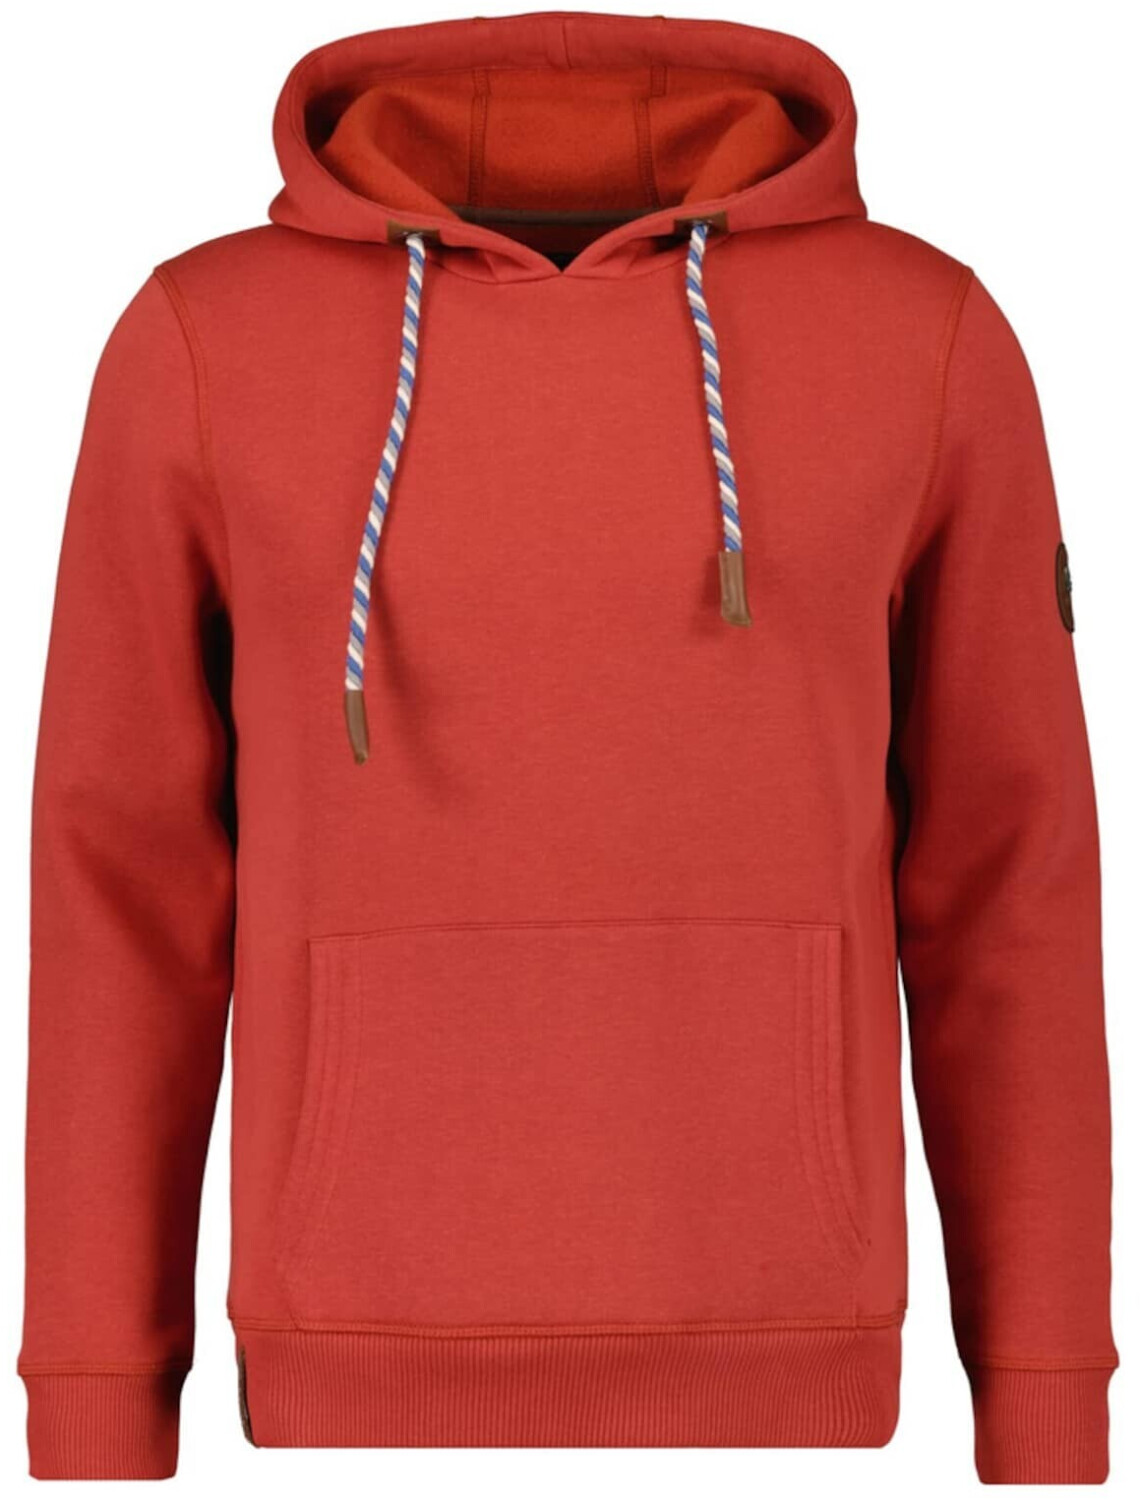 Ragman Hoody-Sweater (809096-063) rostrot ab 59,95 € | Preisvergleich bei